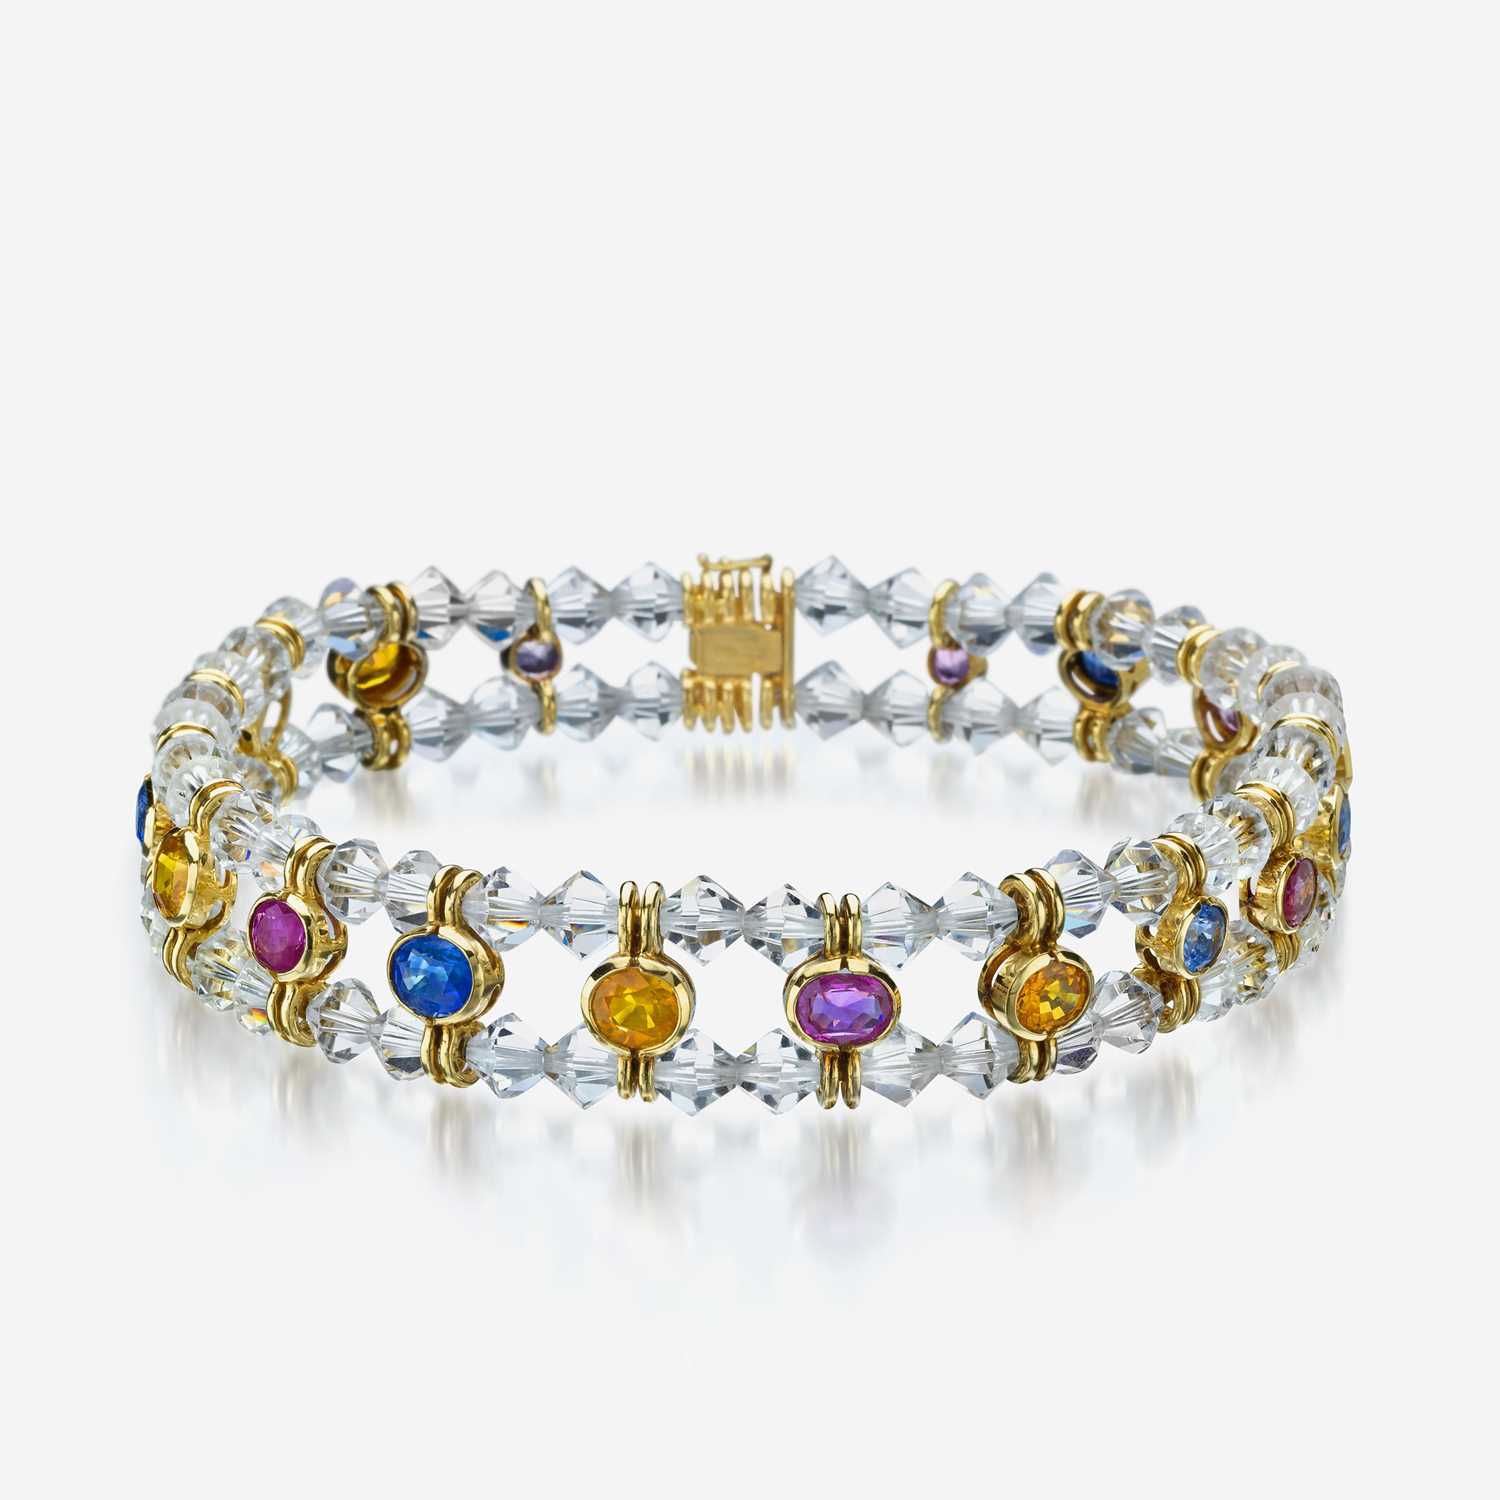 Lot 51 - An eighteen karat gold, colored sapphire, and rock crystal necklace, Bulgari